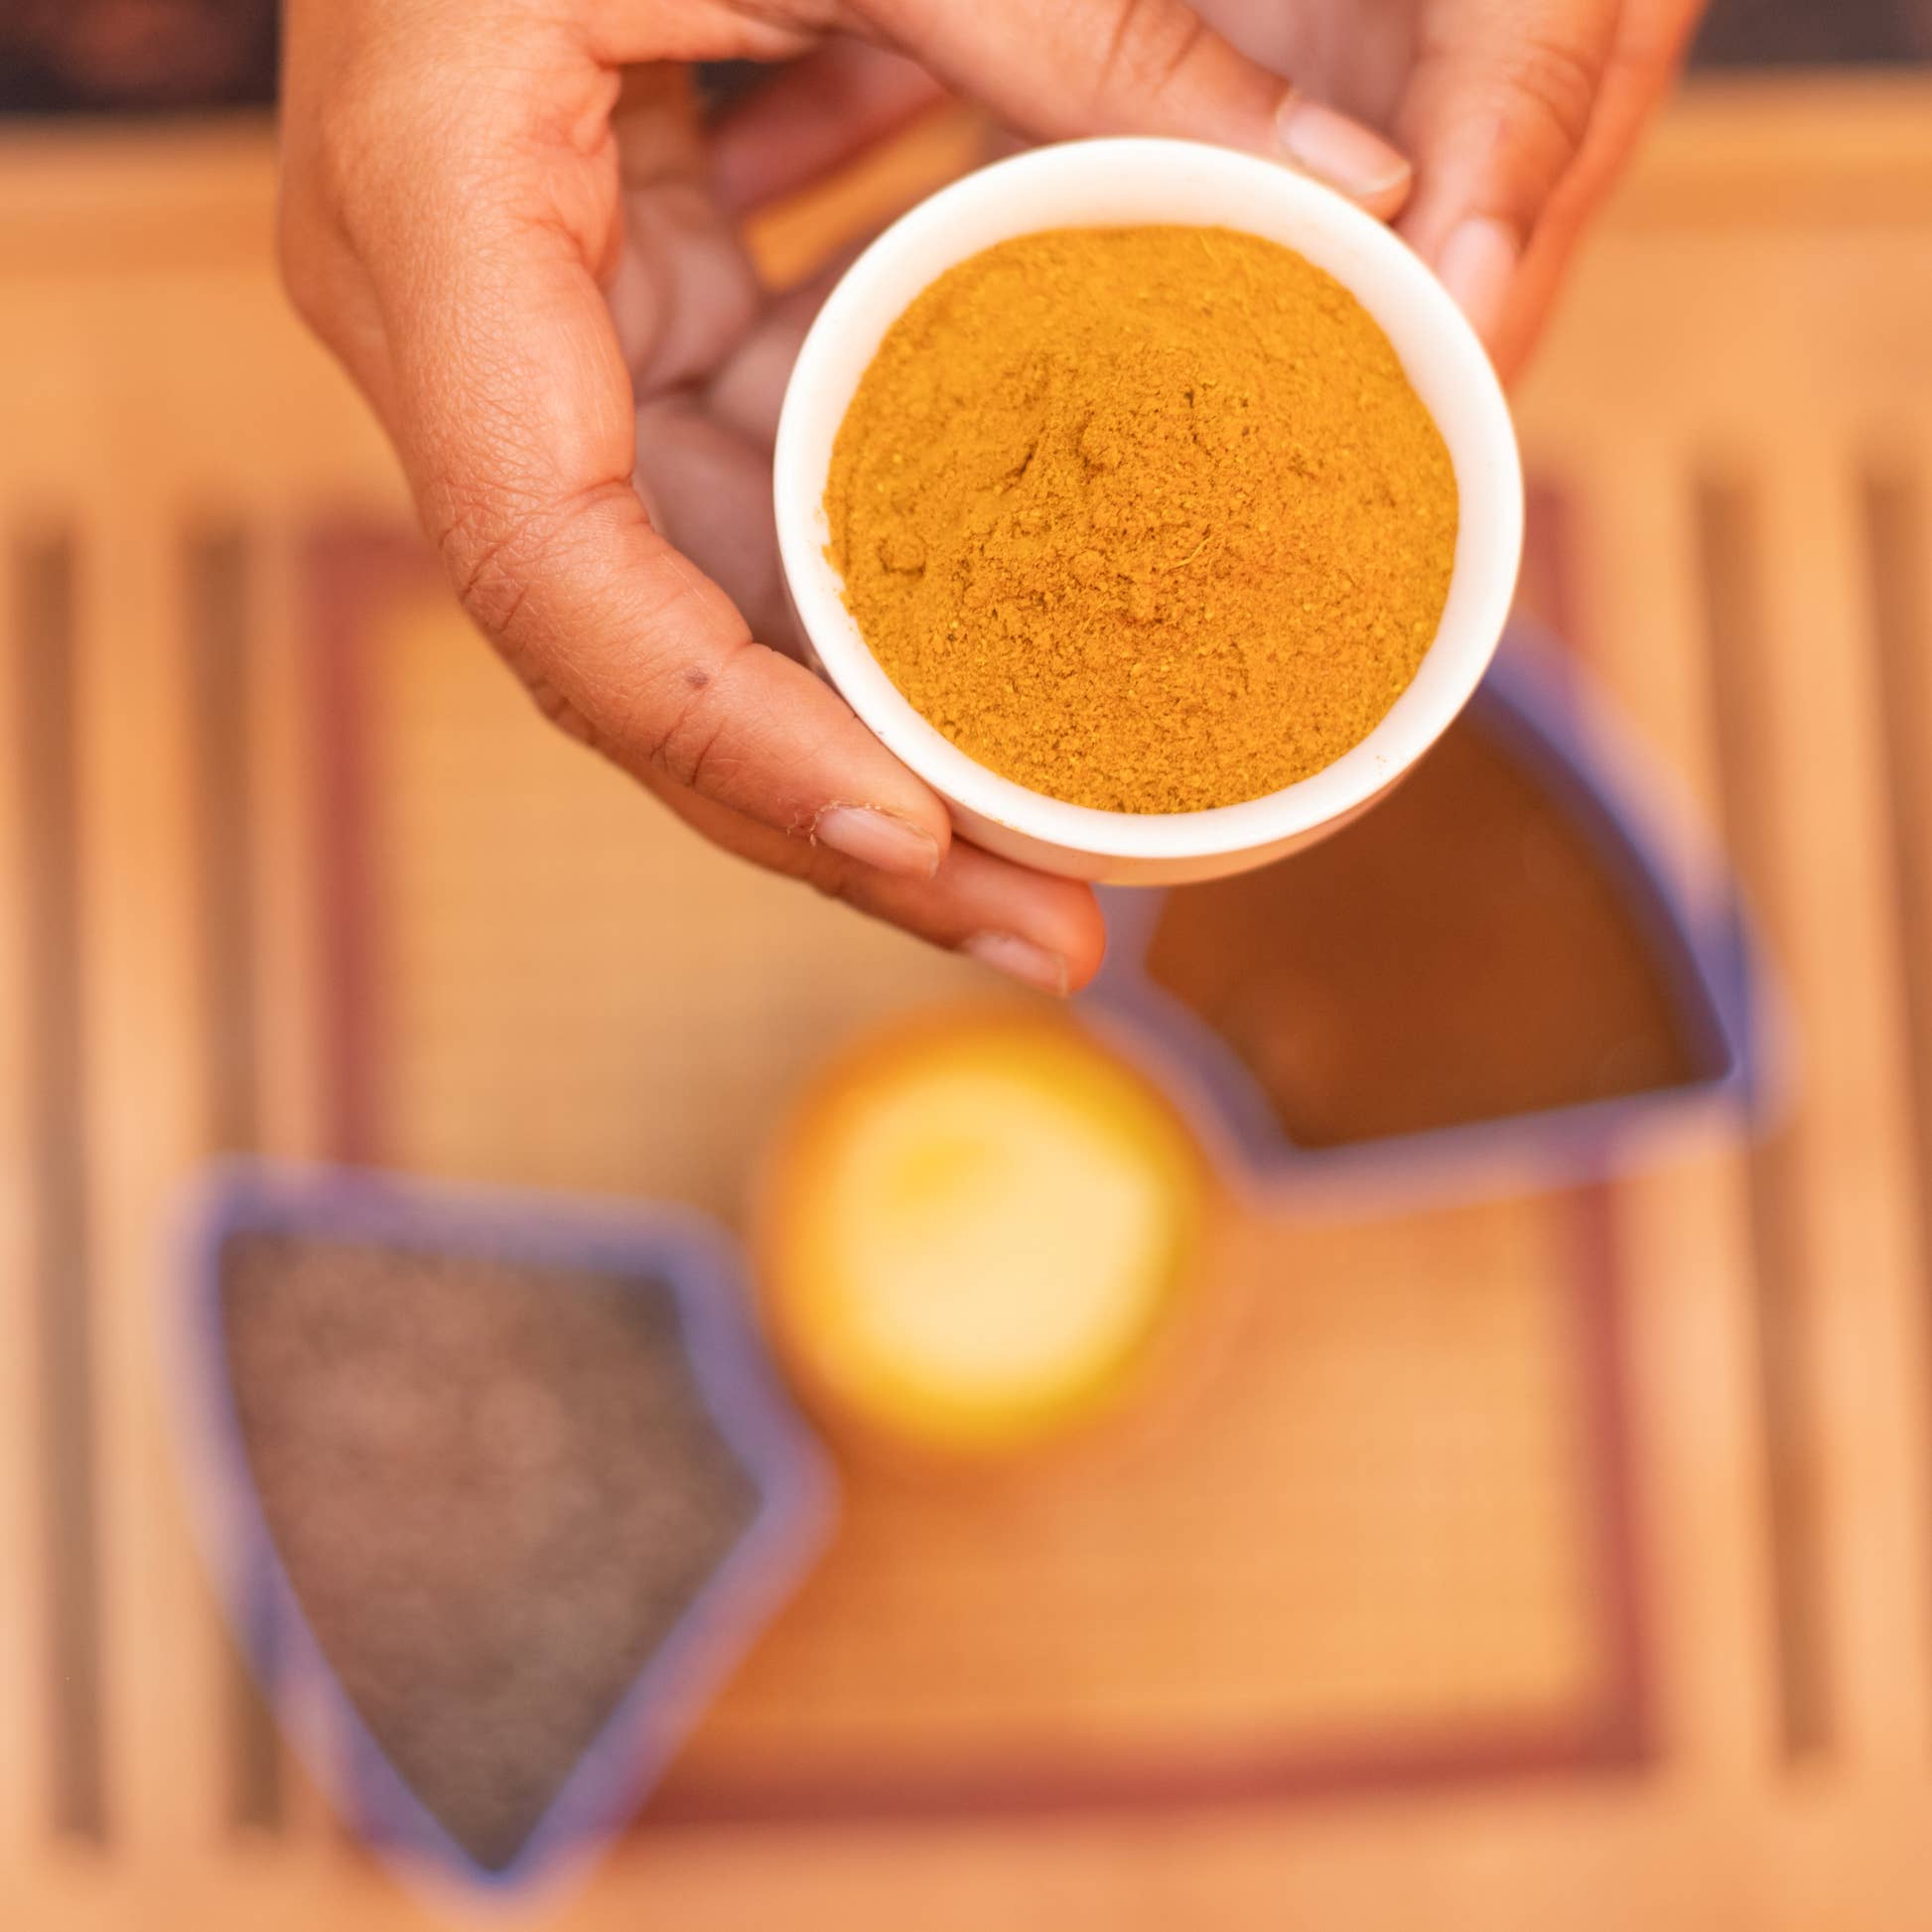 Bowl of Organic Golden Milk turmeric tea powder by Nepal Tea